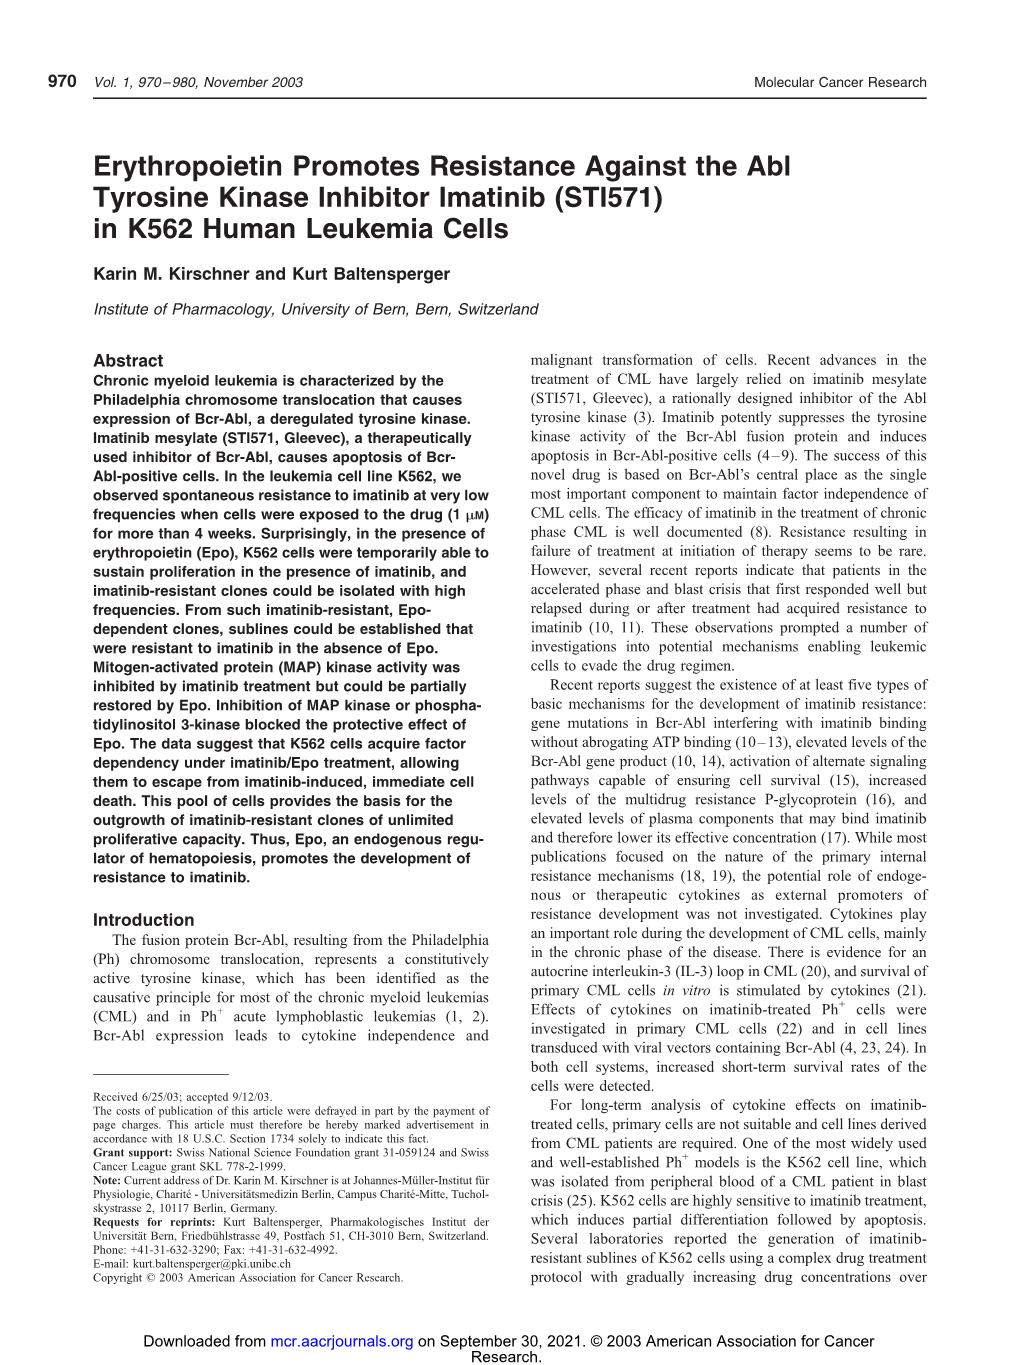 Erythropoietin Promotes Resistance Against the Abl Tyrosine Kinase Inhibitor Imatinib (STI571) in K562 Human Leukemia Cells